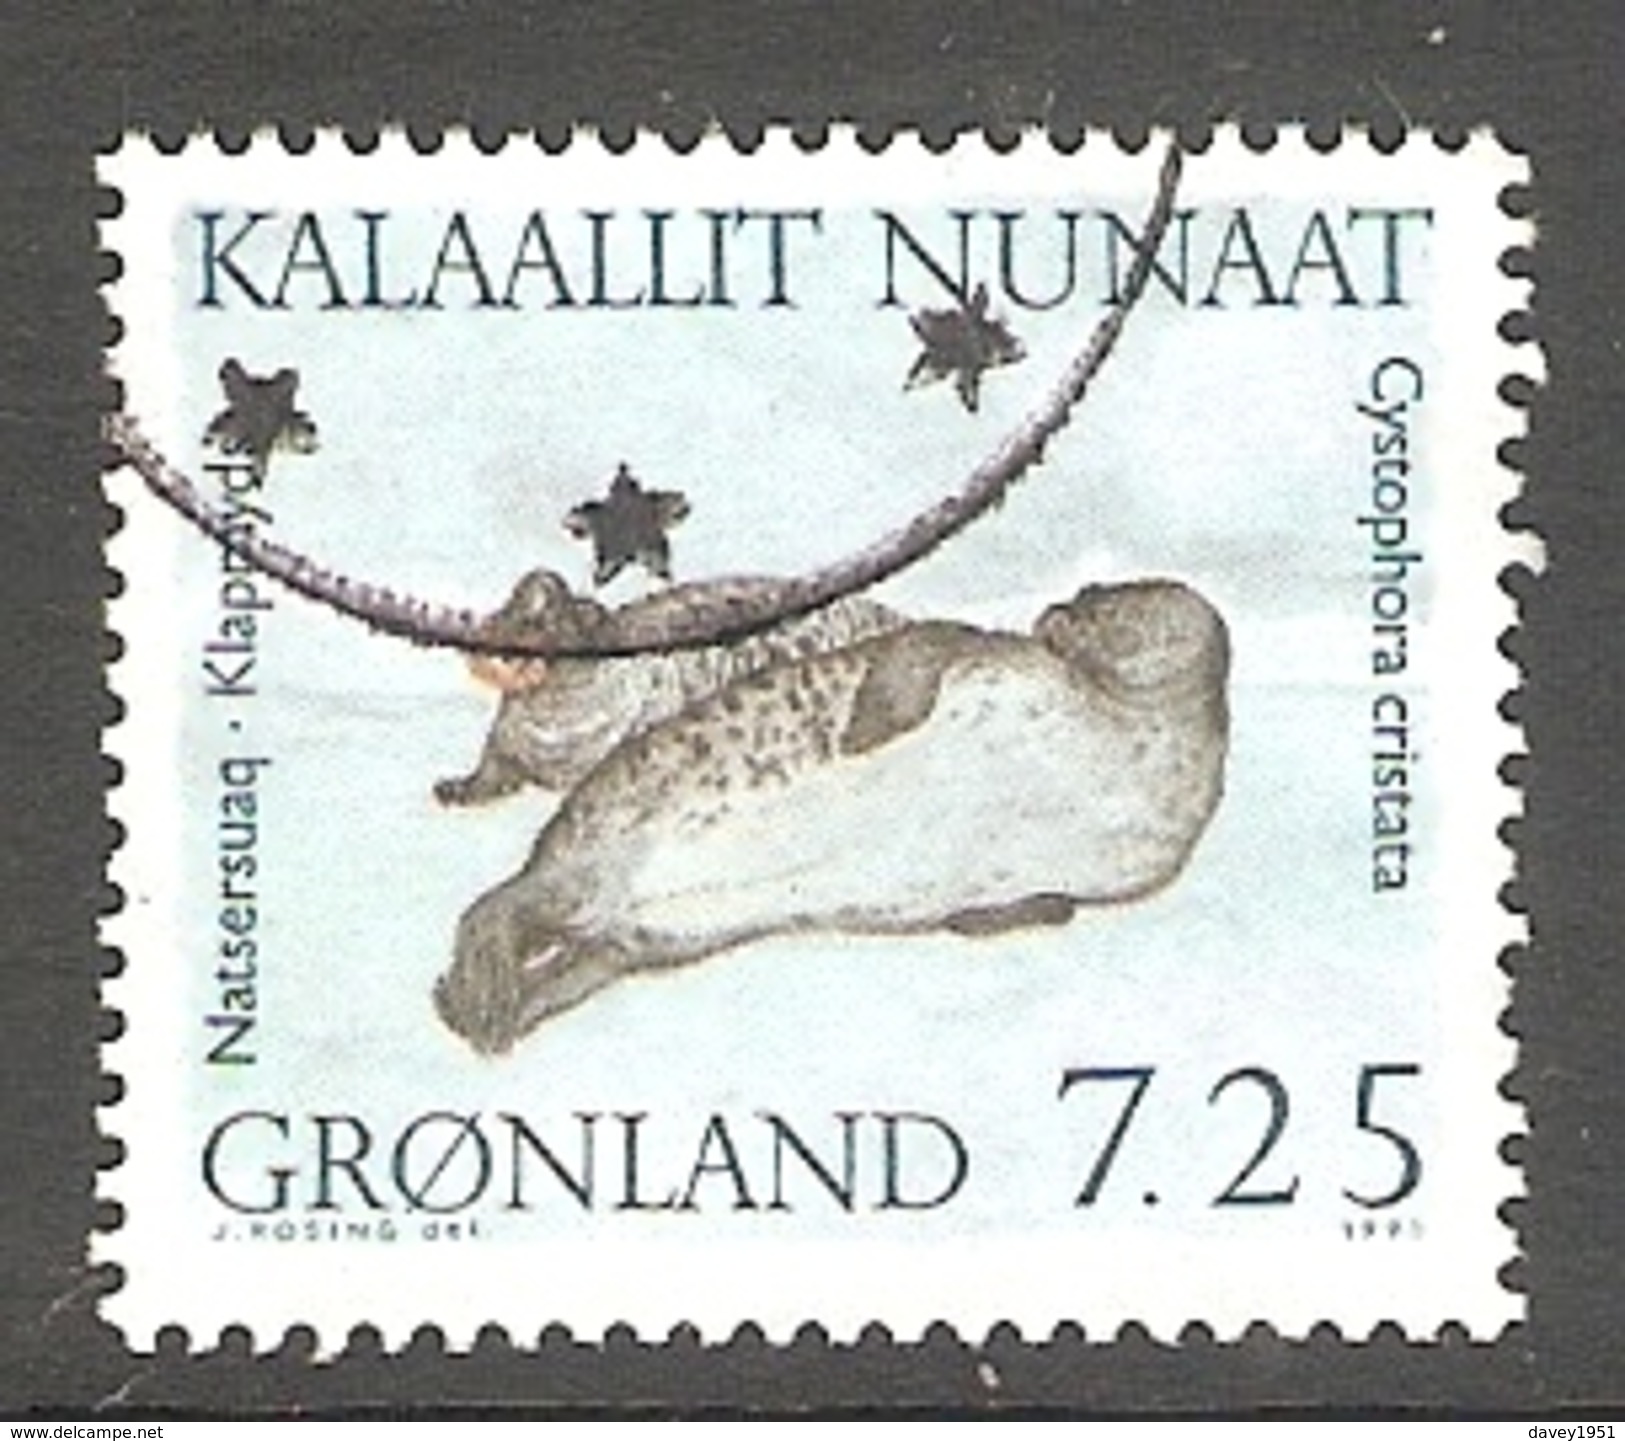 003995 Greenland 1991 Marine Mammals 7.25K FU - Usados